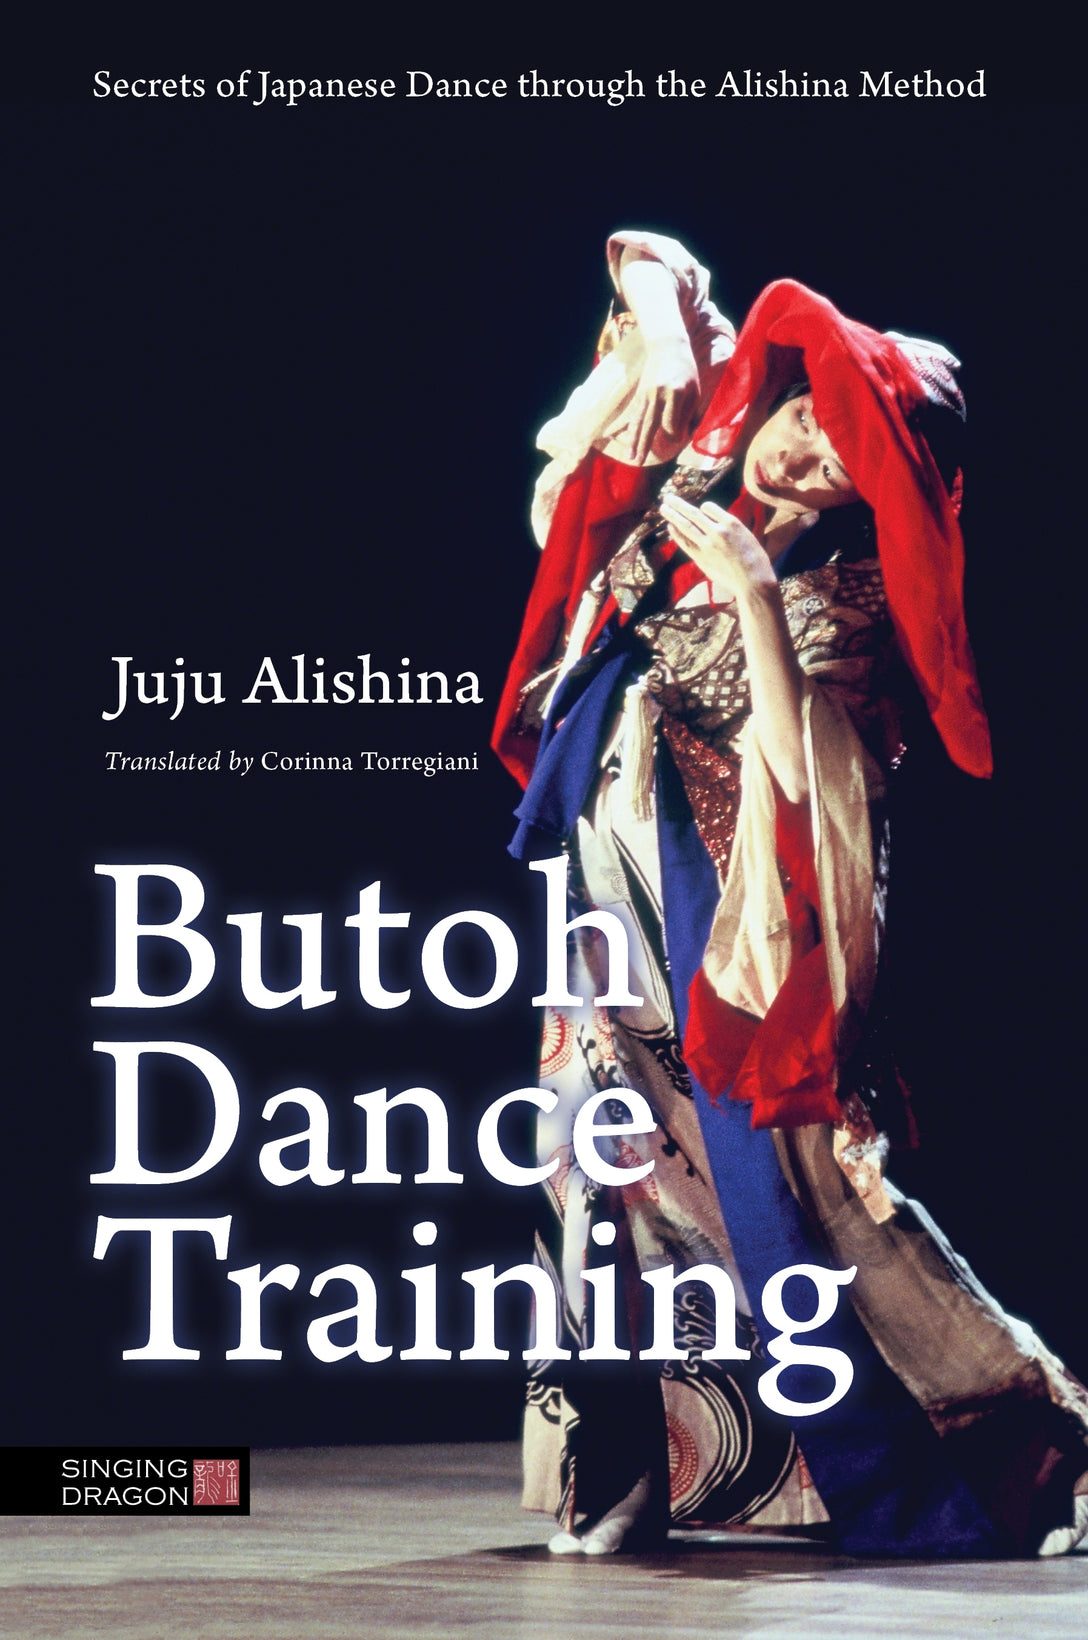 Butoh Dance Training by Juju Alishina